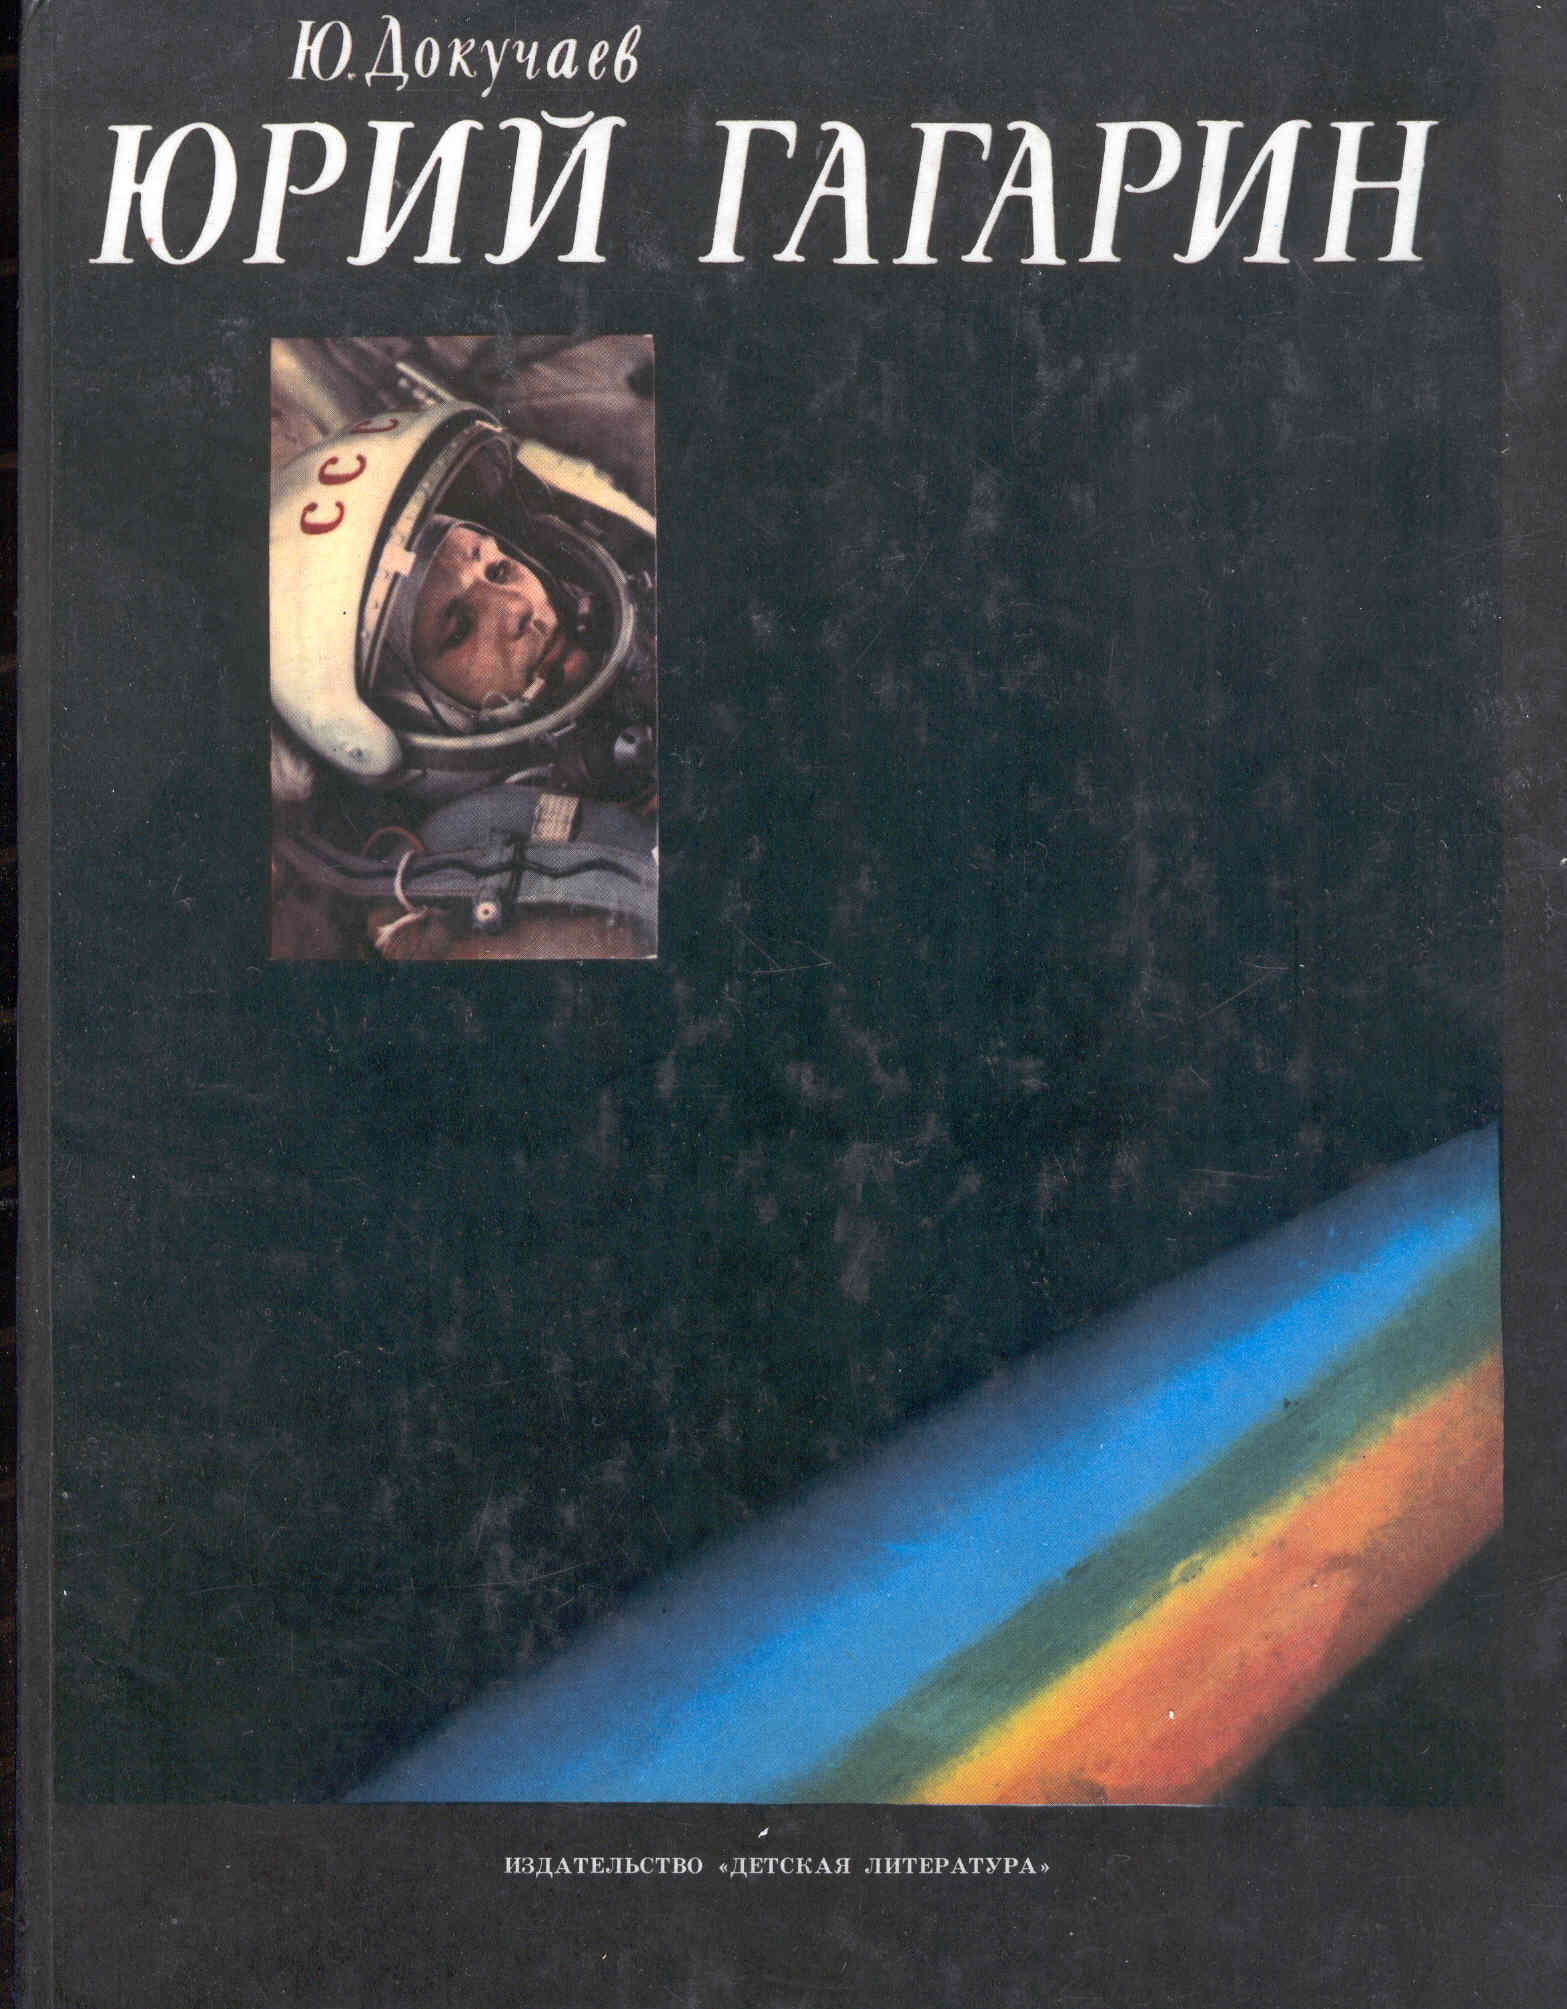 # cb190 Seven cosmonauts autographed book about Yuri Gagarin